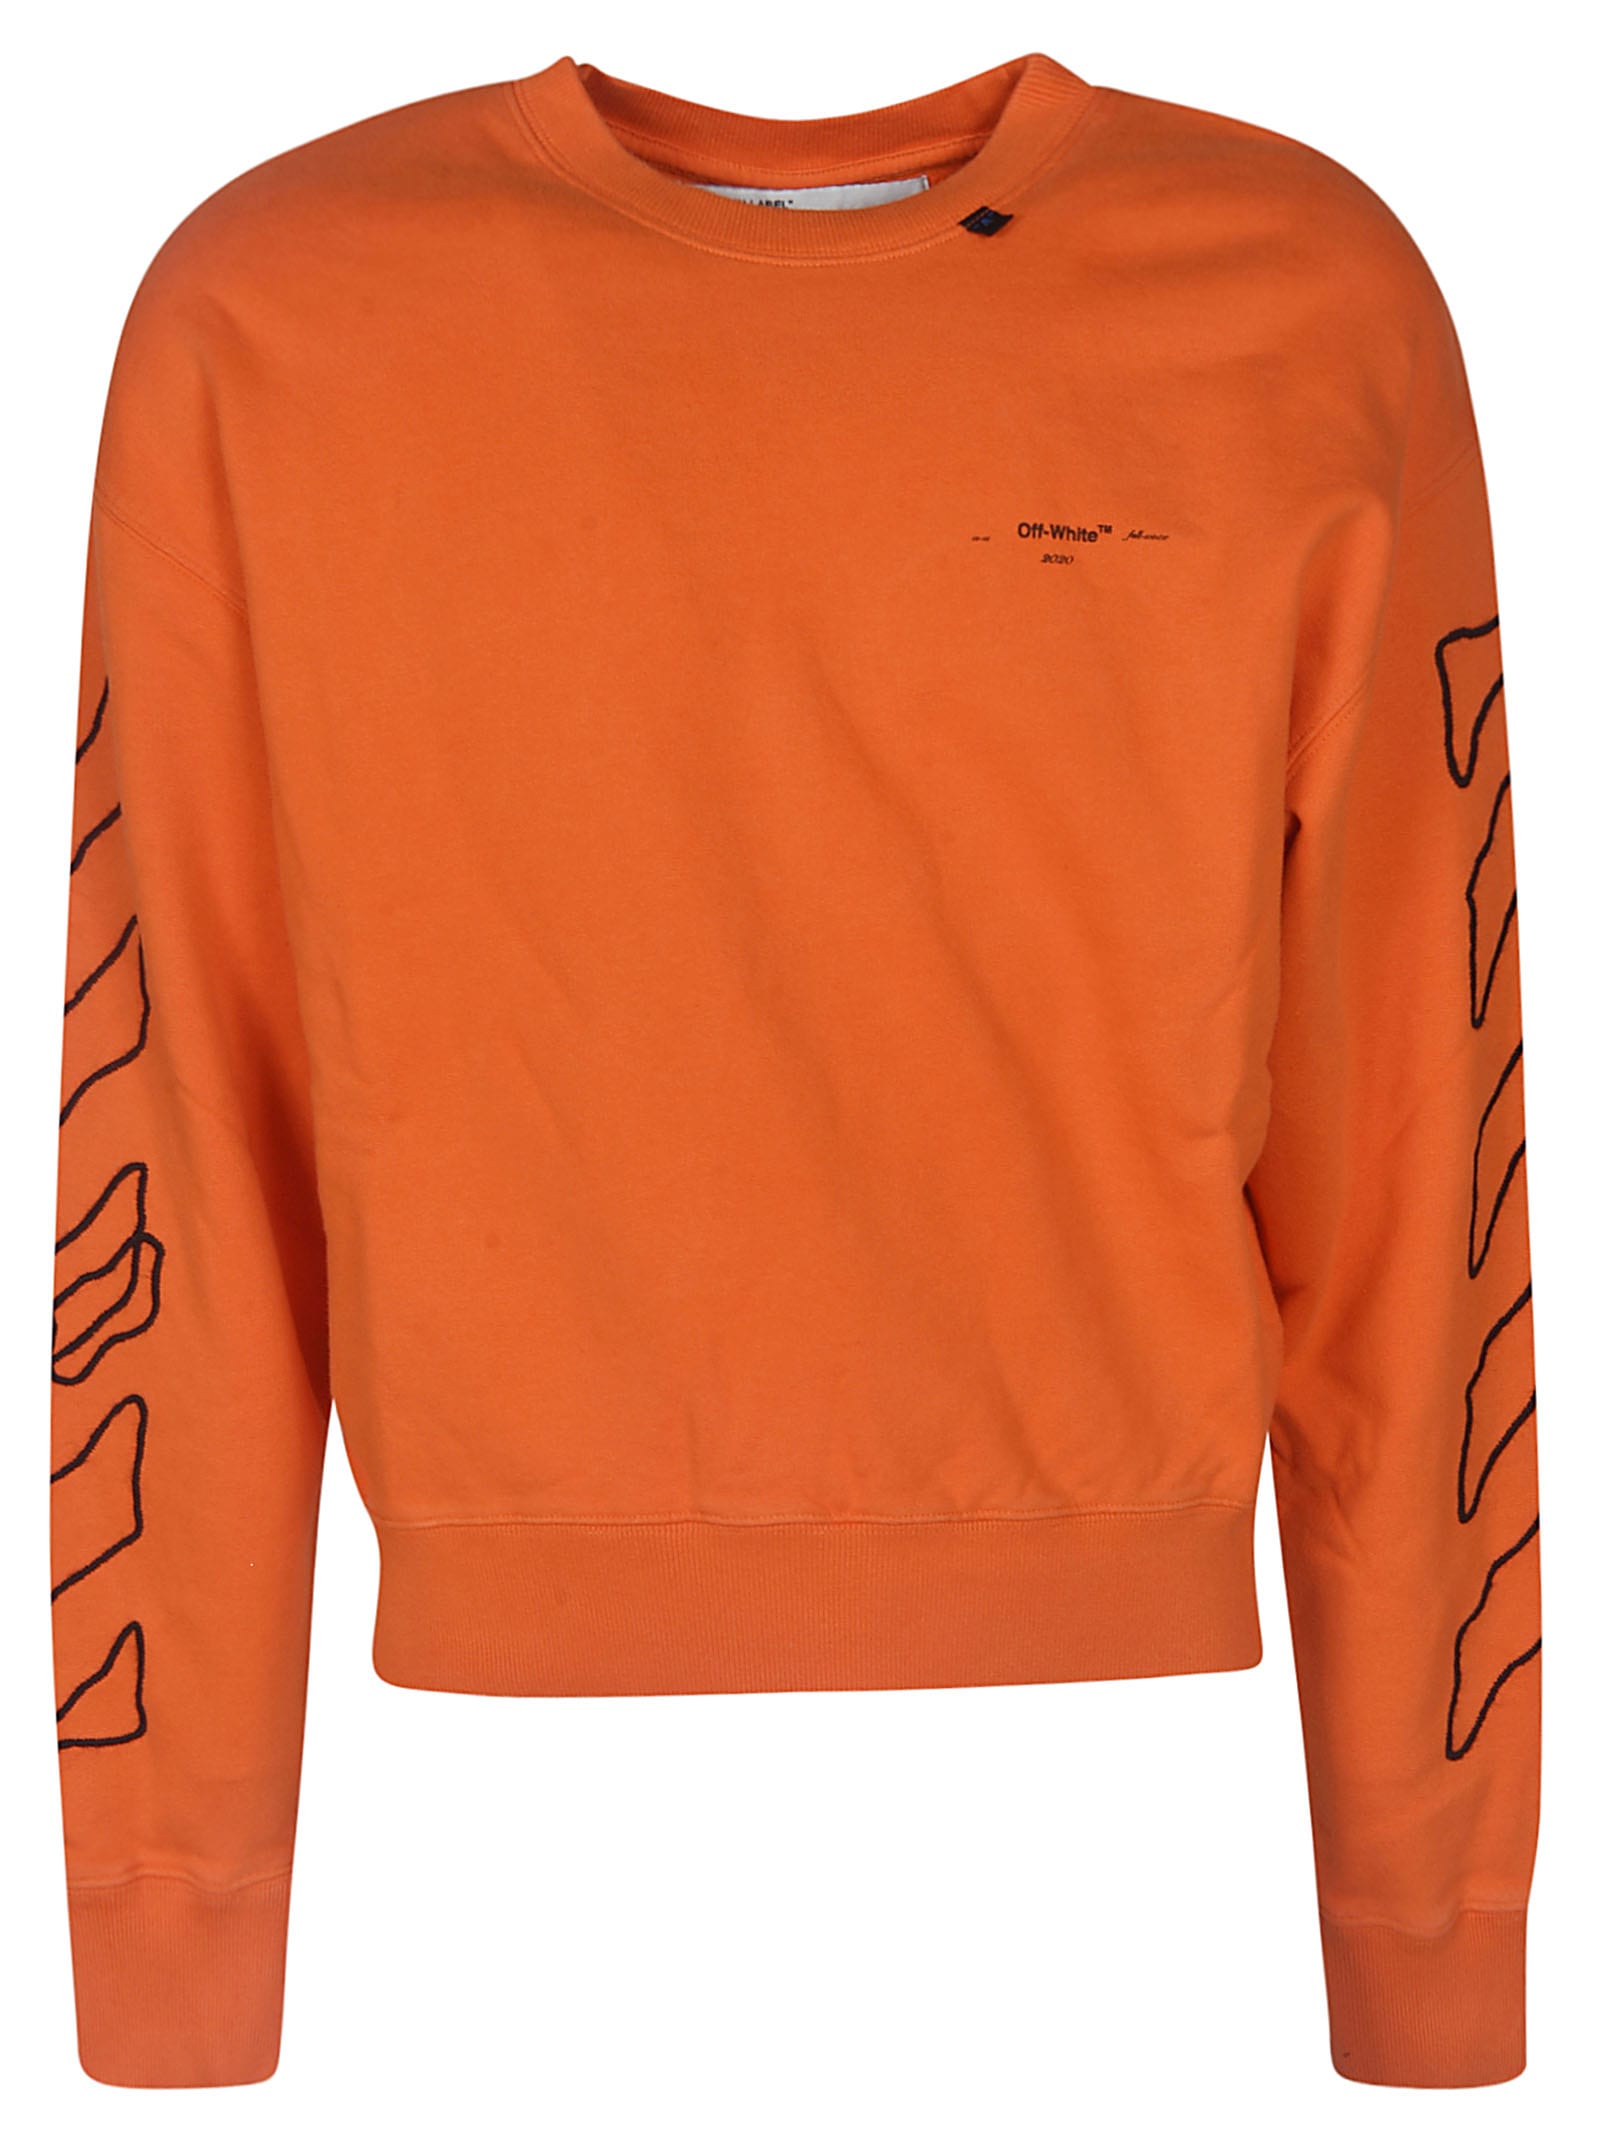 off white orange sweatshirt